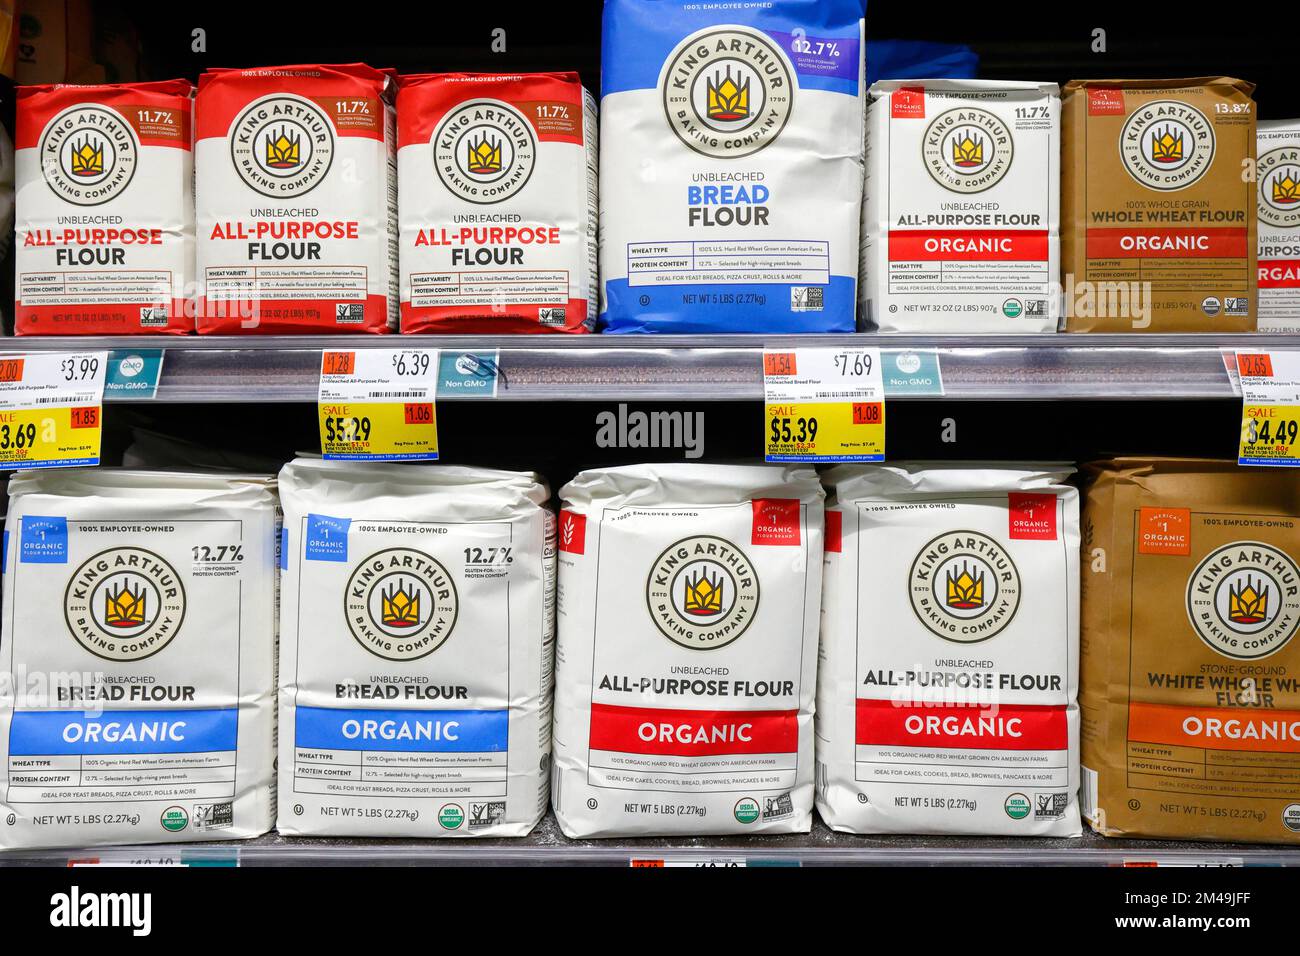 King Arthur Baking Company organic flour on a supermarket shelf. Stock Photo